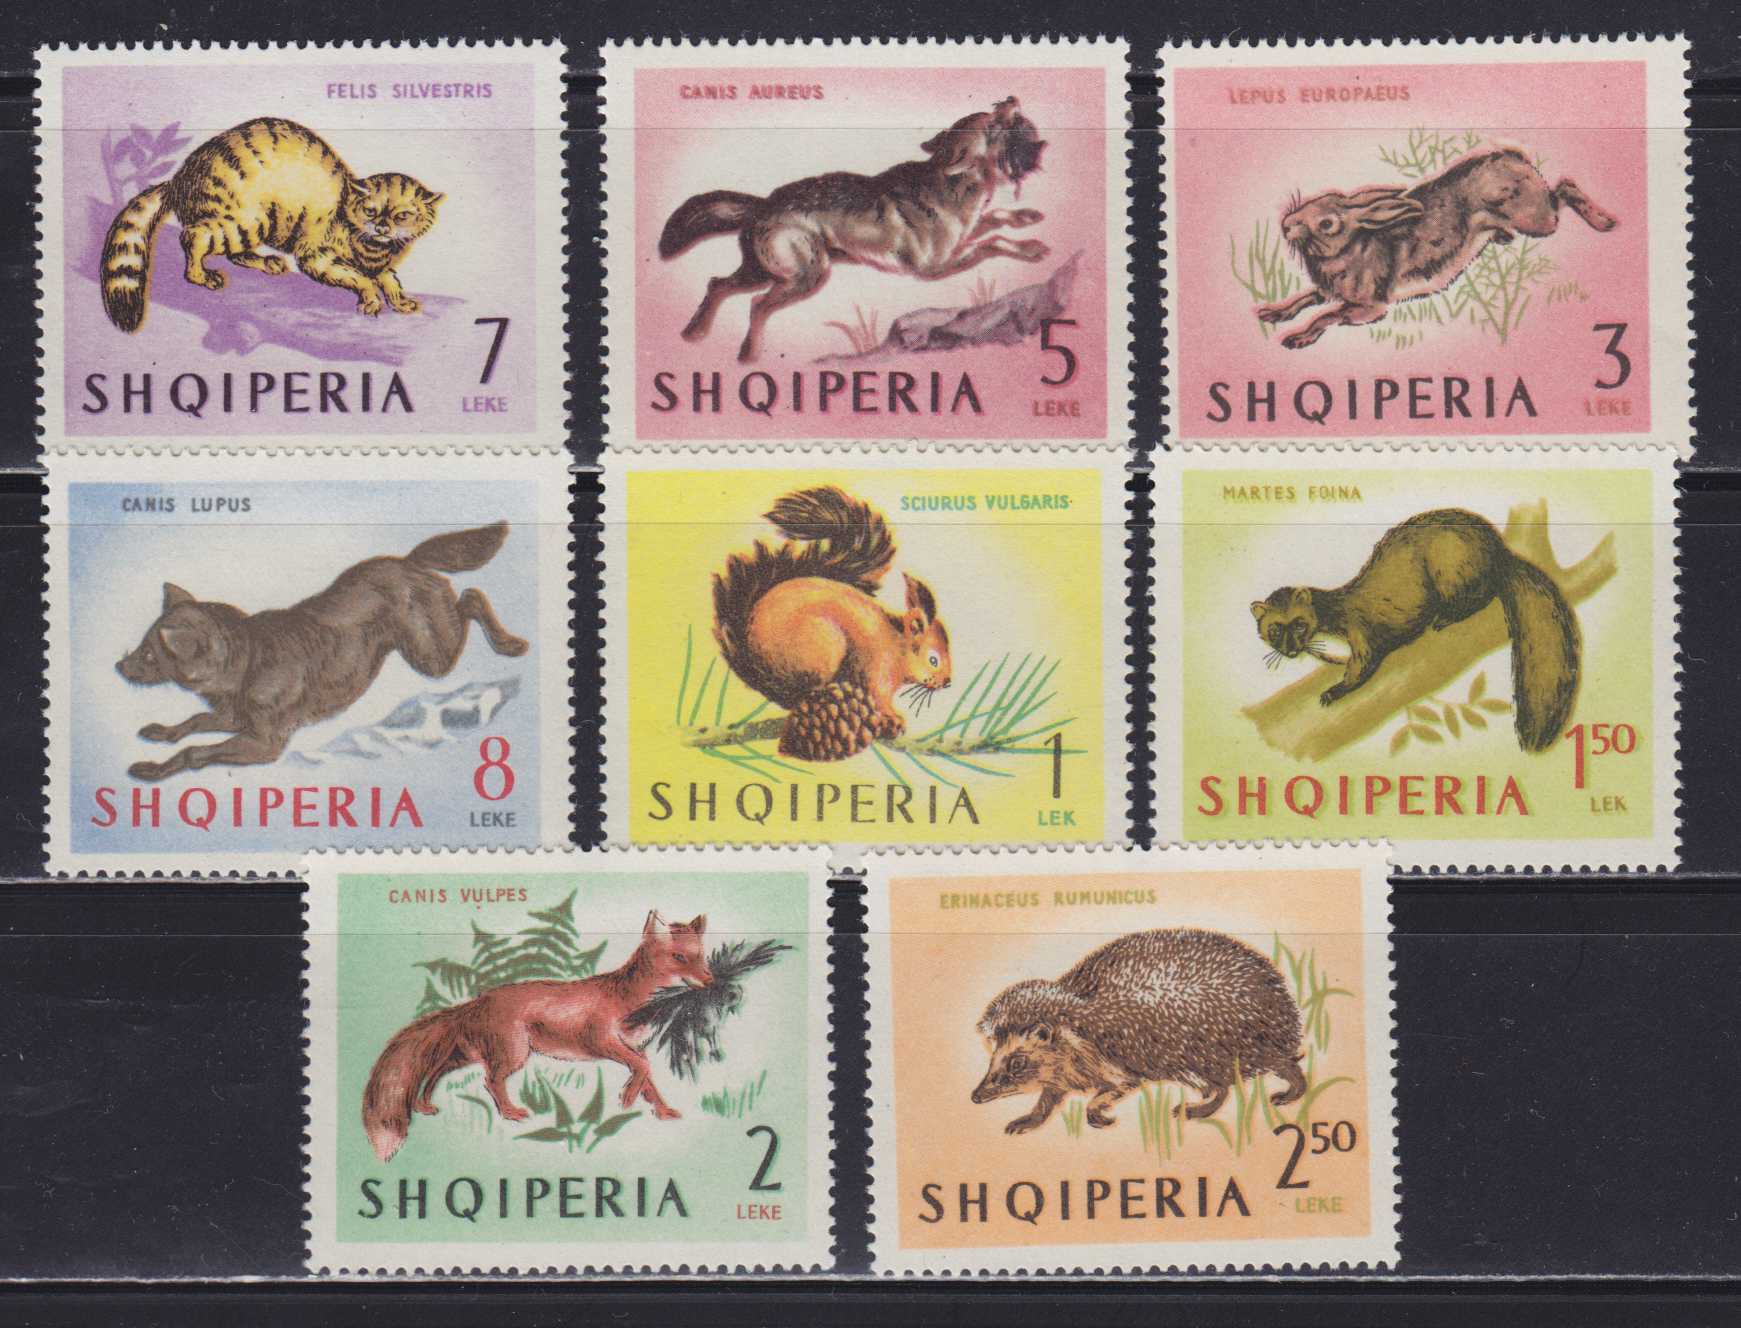 Stampworld марки